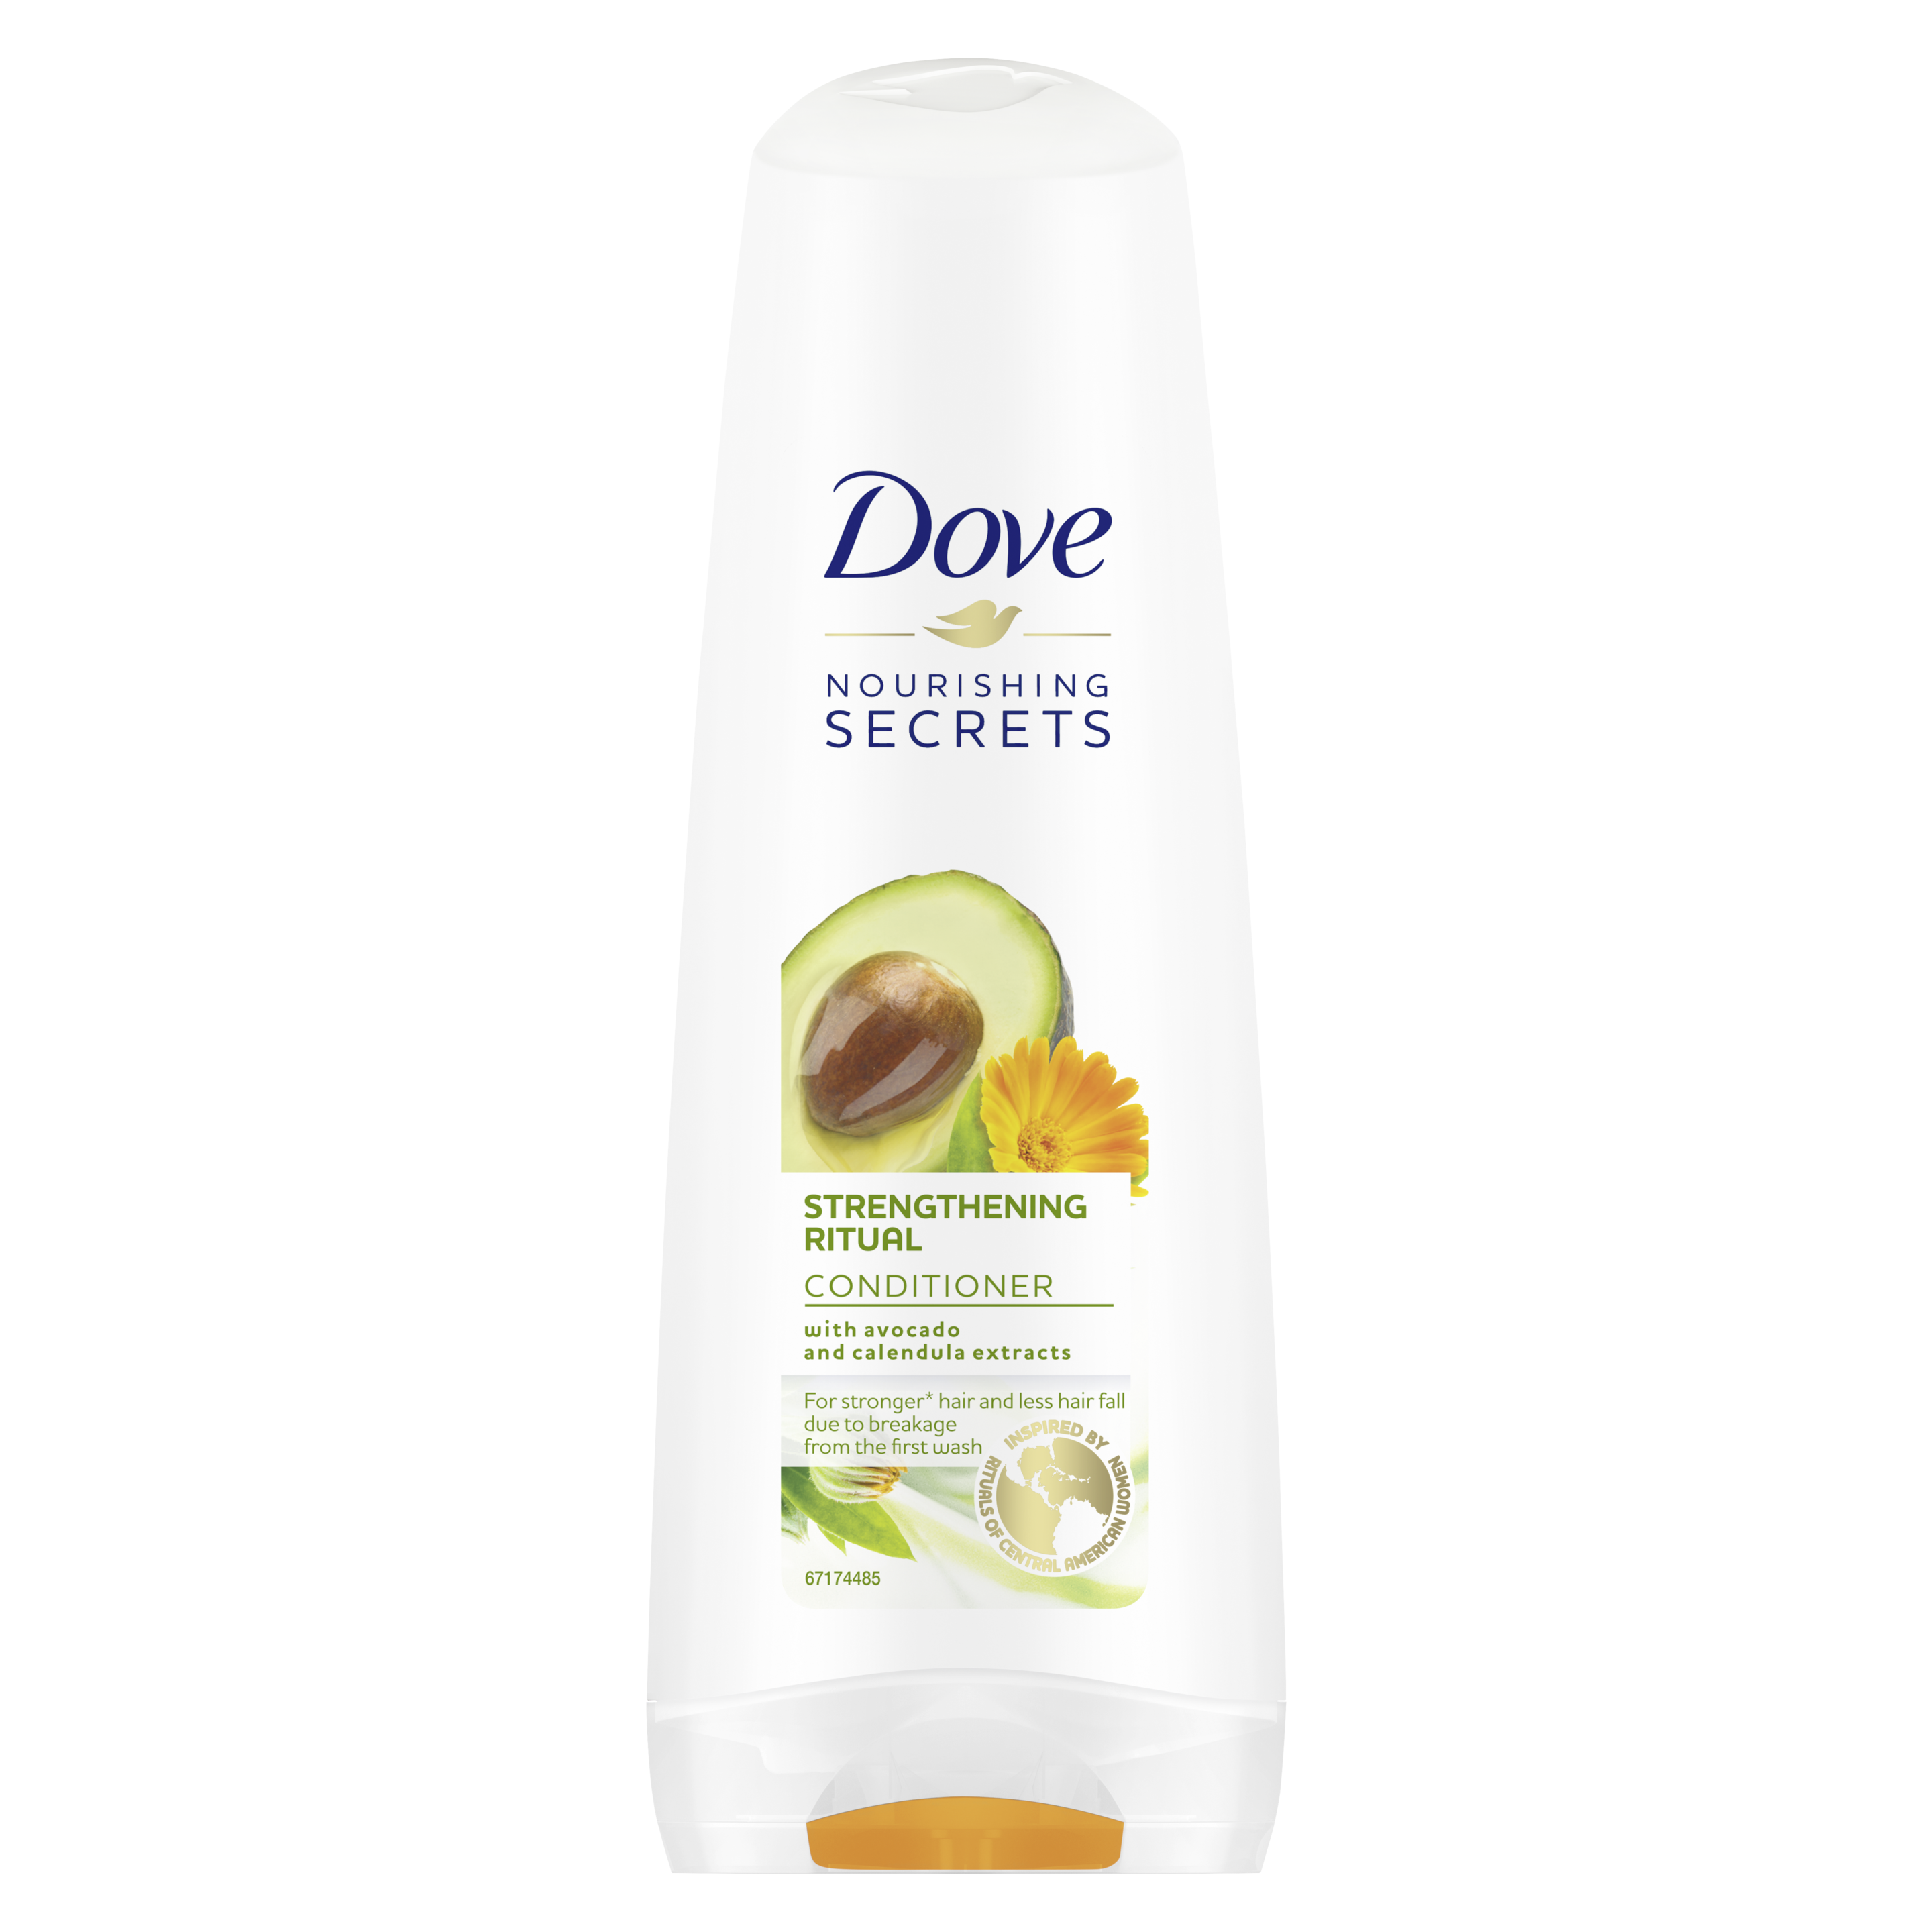 Dove Nourishing Secrets Strengthening Ritual Conditioner 200ml